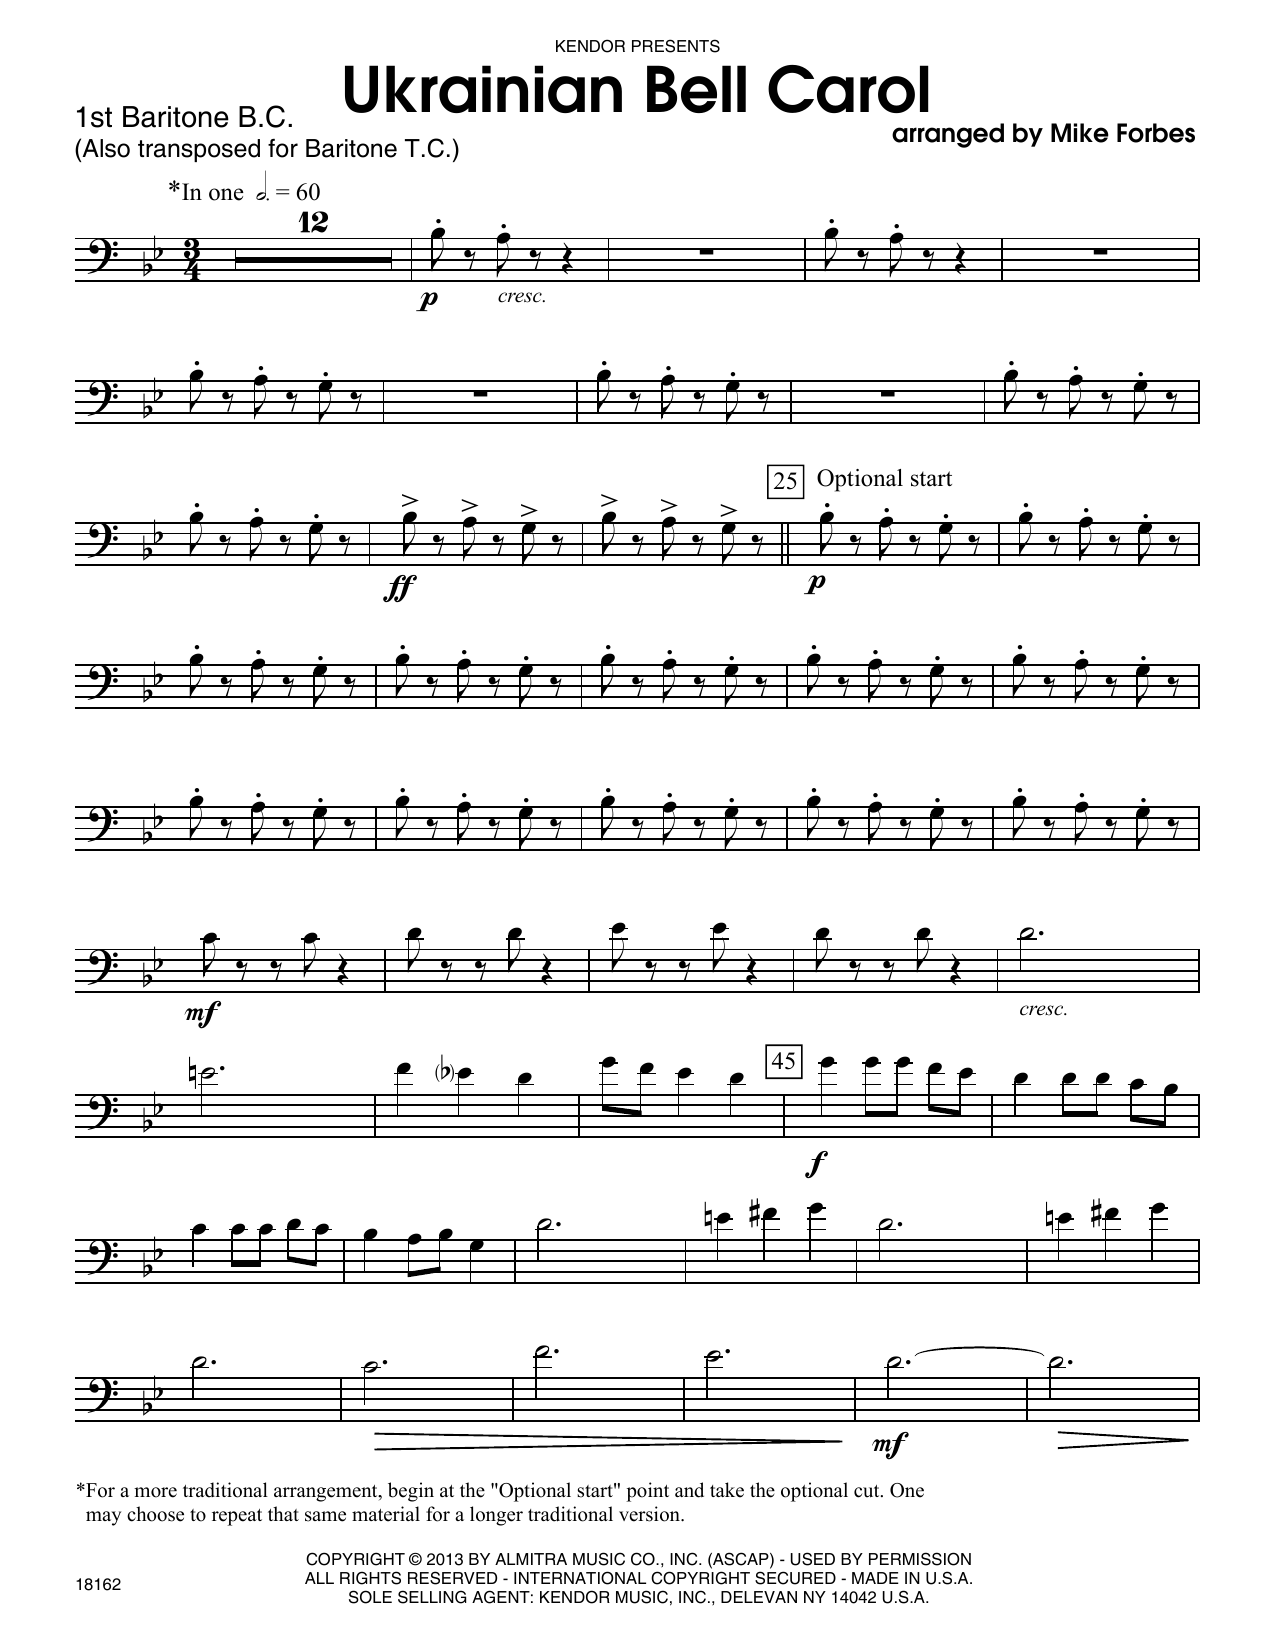 Download Michael Forbes Ukrainian Bell Carol - 1st Baritone B.C Sheet Music